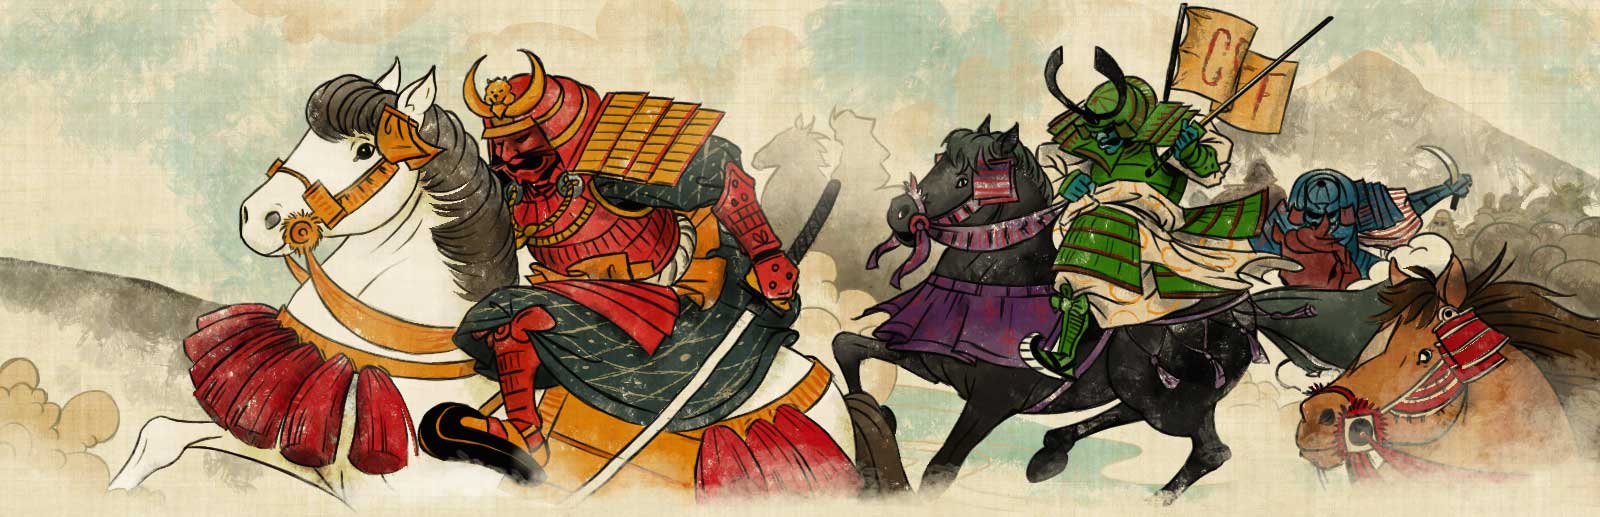 Image of Samurai fighting in a field